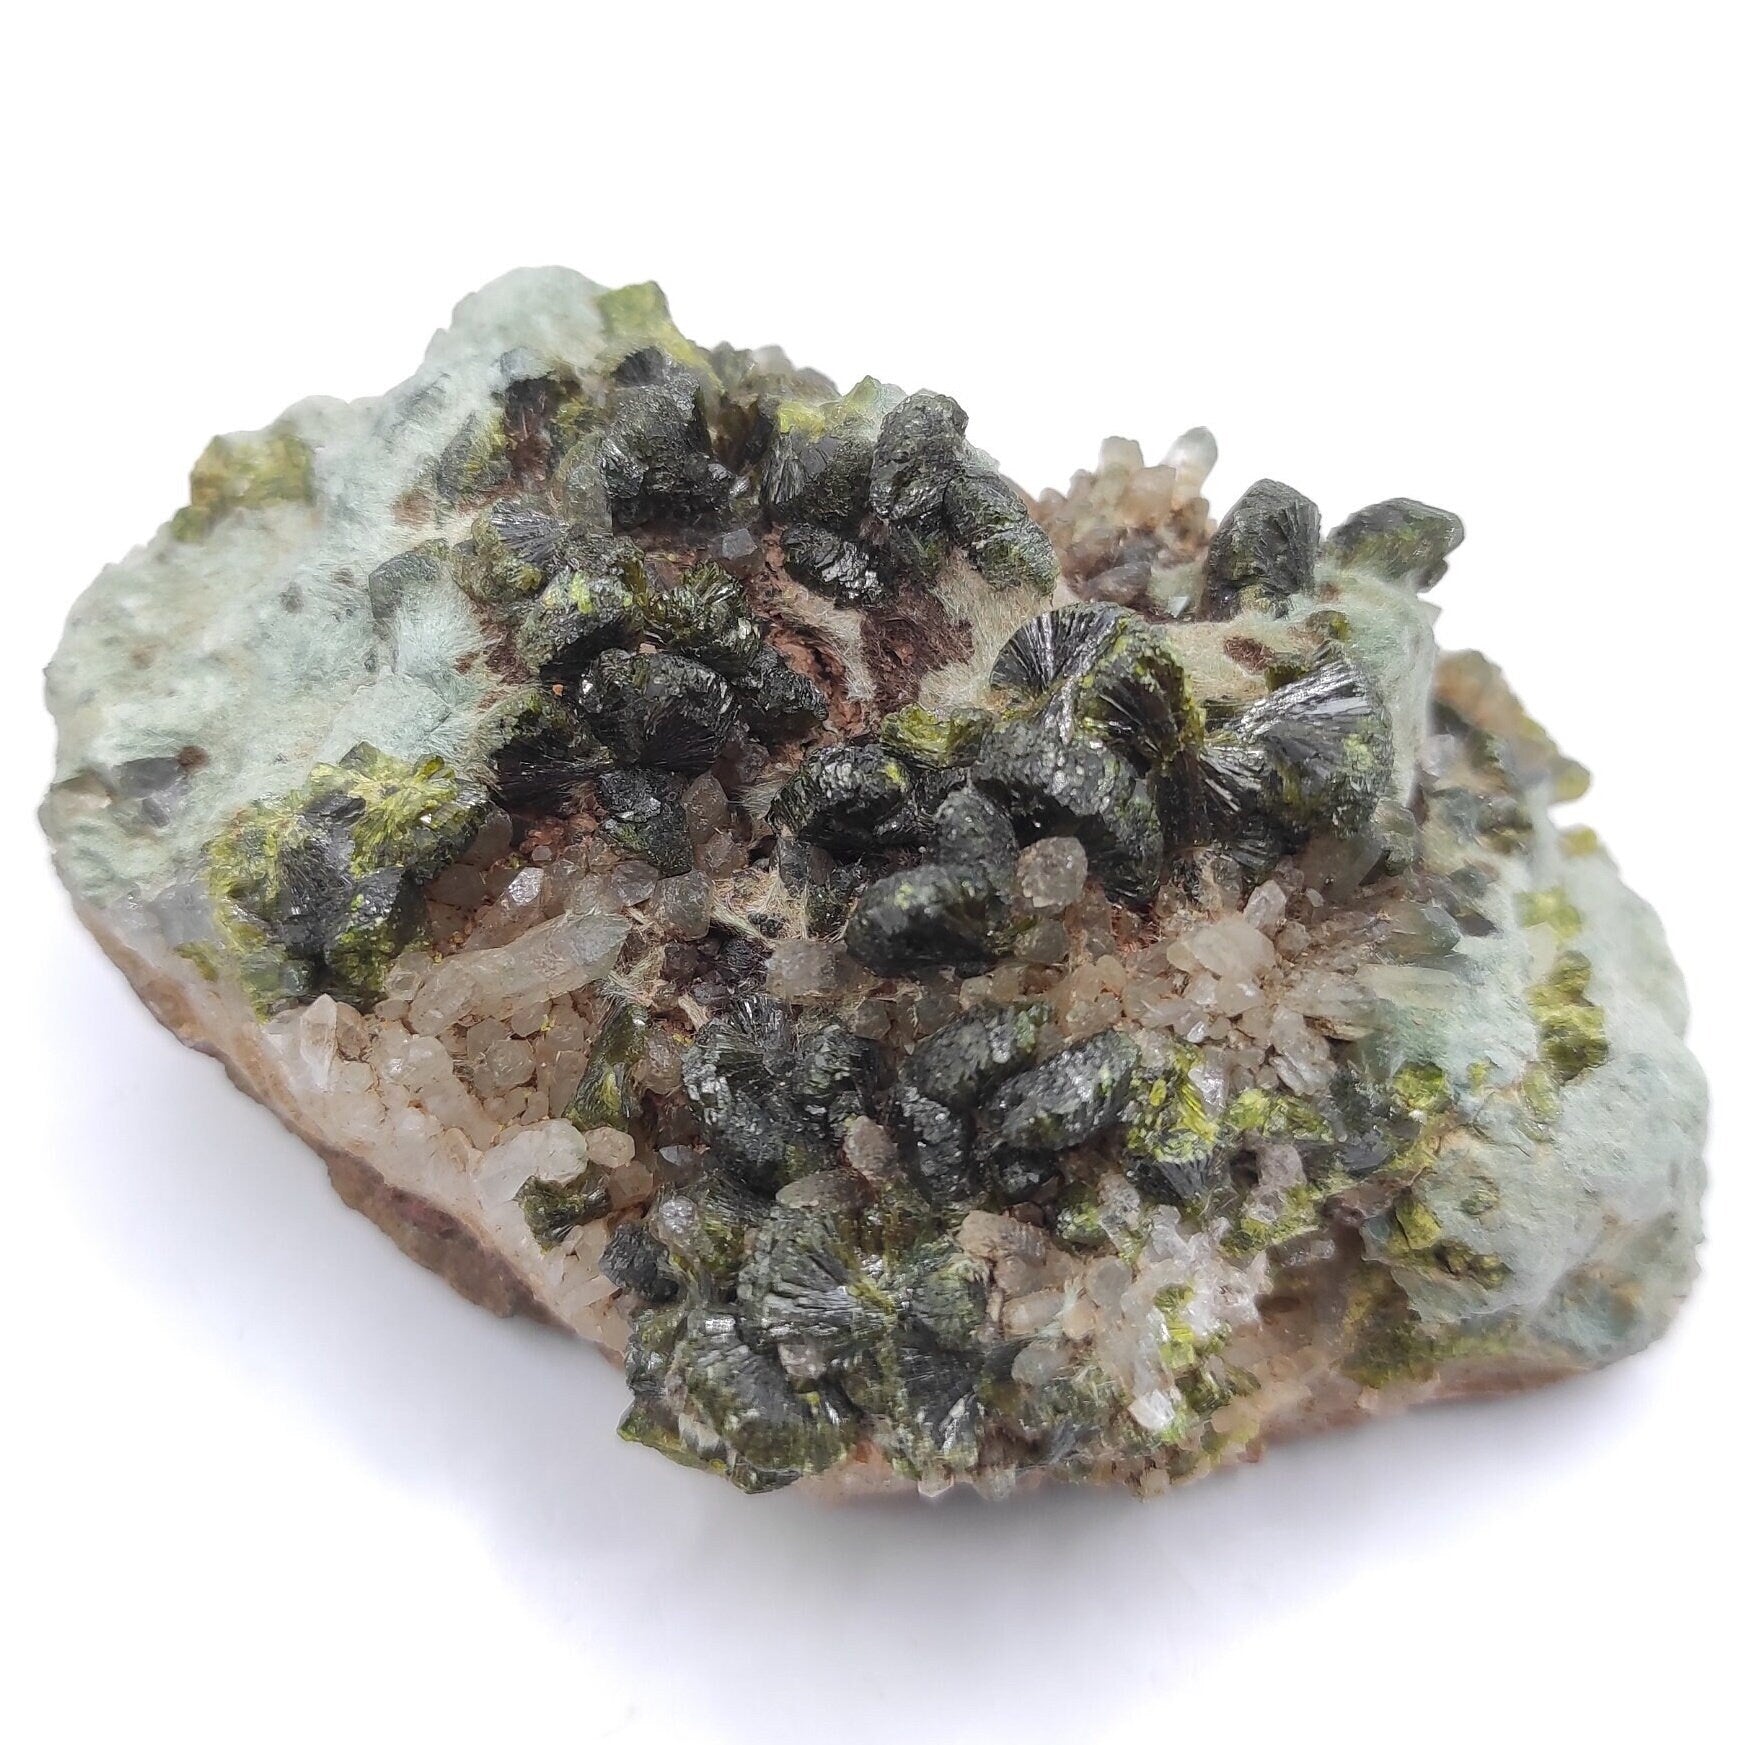 144g Epidote with Quartz - Imilchil, Morocco - Green Epidote Crystal Cluster - Raw Mineral Specimen - Green Epidote and Quartz Crystal